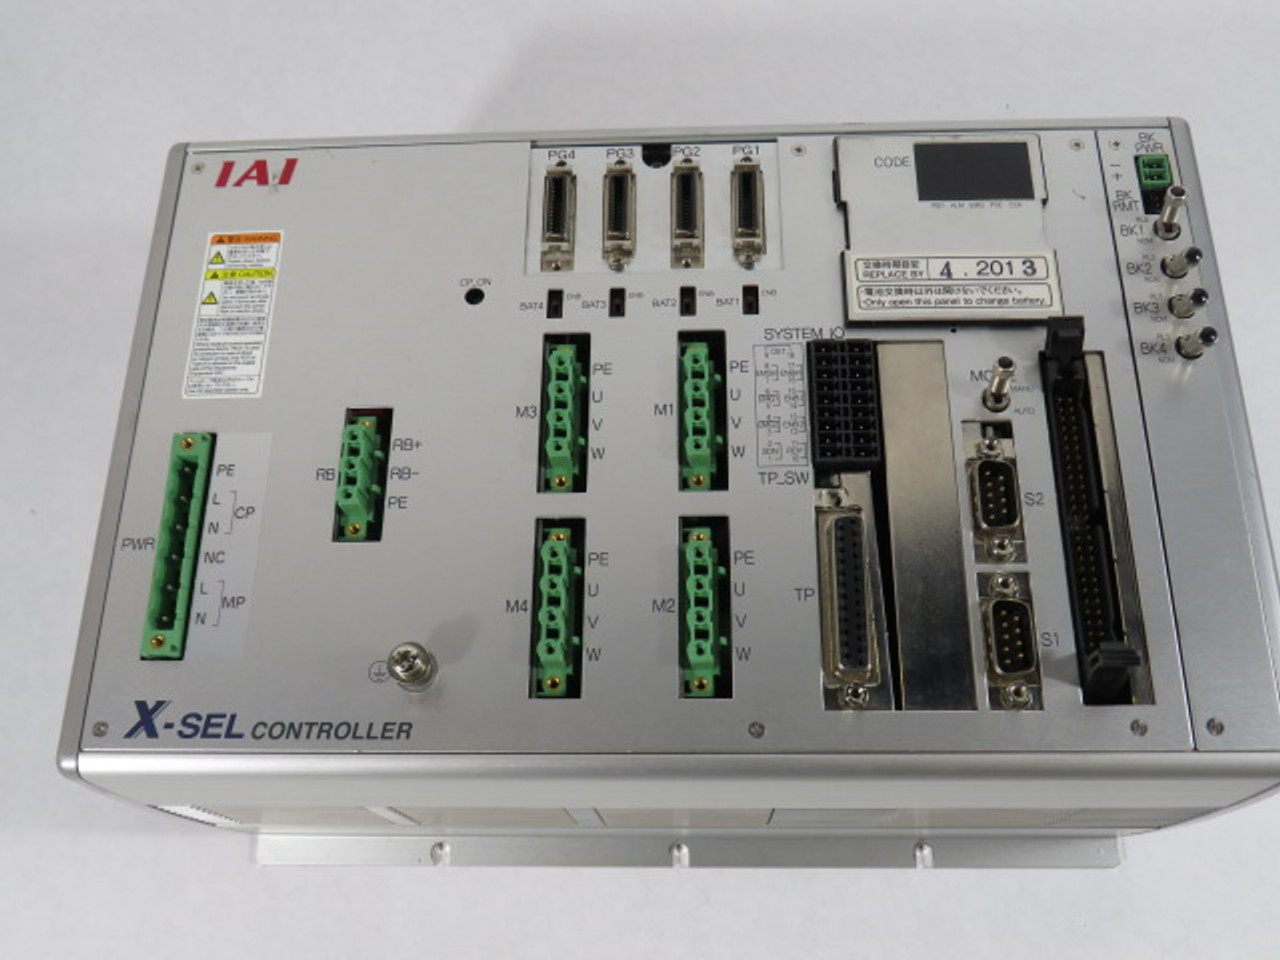 IAI XSEL-P-4-100AB-60AB-100AB-100AB-N1-EEE-3-2 Program Controller ! NEW !